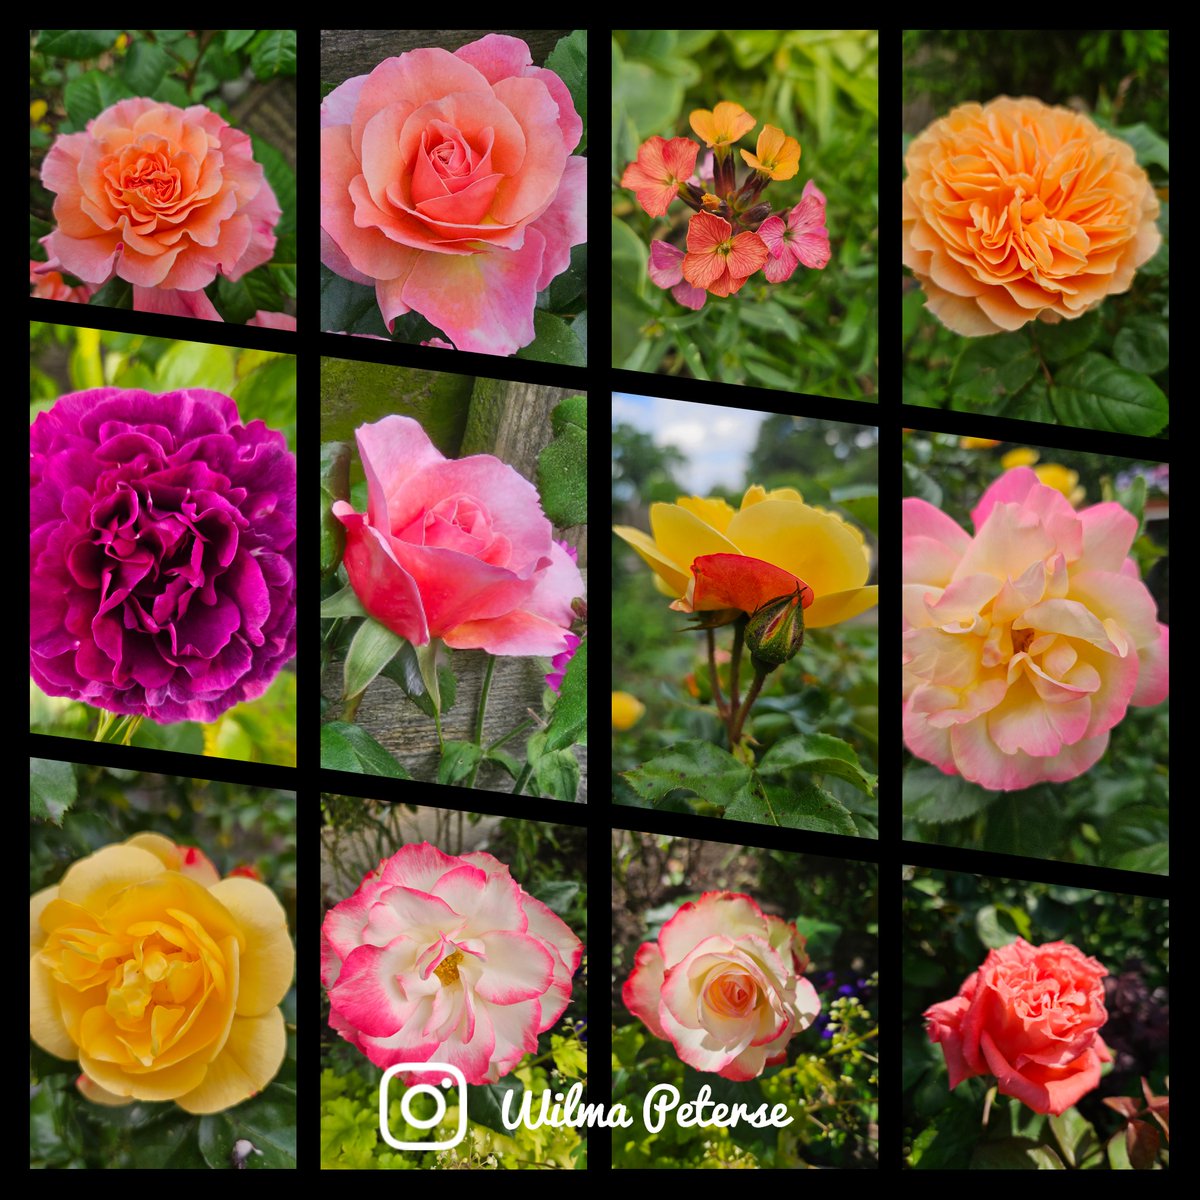 Bijna alle rozen in mijn tuin bloeien nu...
#flowers #flores #rozen #roses #mygarden #gardenersworld #flowersoftwitter #gardening #tuinieren #nature #naturephotography #natuurfotografie